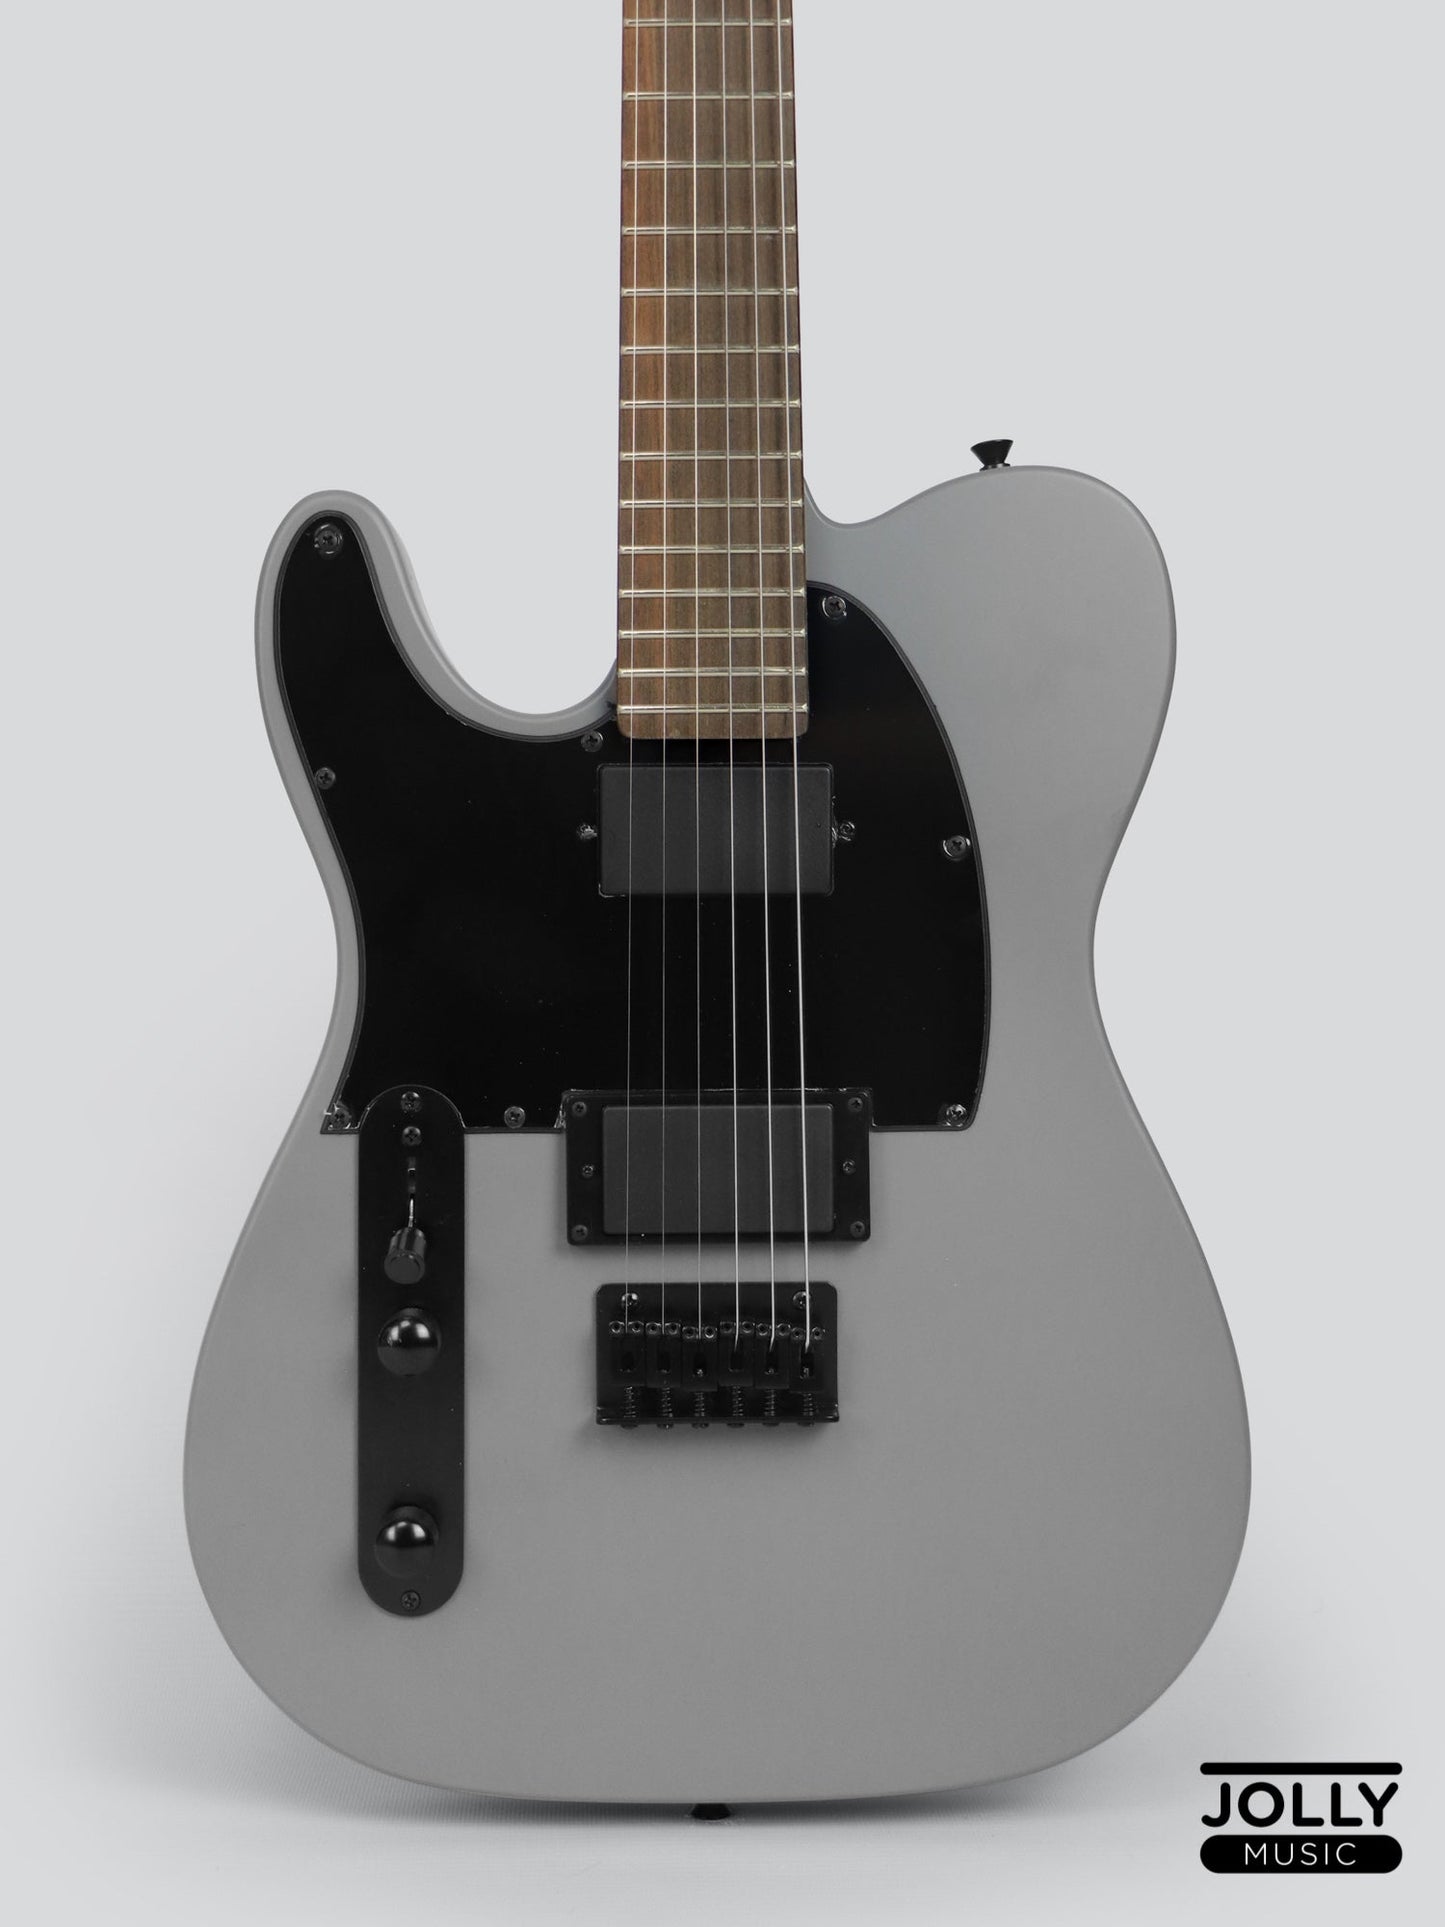 JCraft X Series LTX-1 LEFT HAND Electric Guitar with Gigbag - Gunmetal